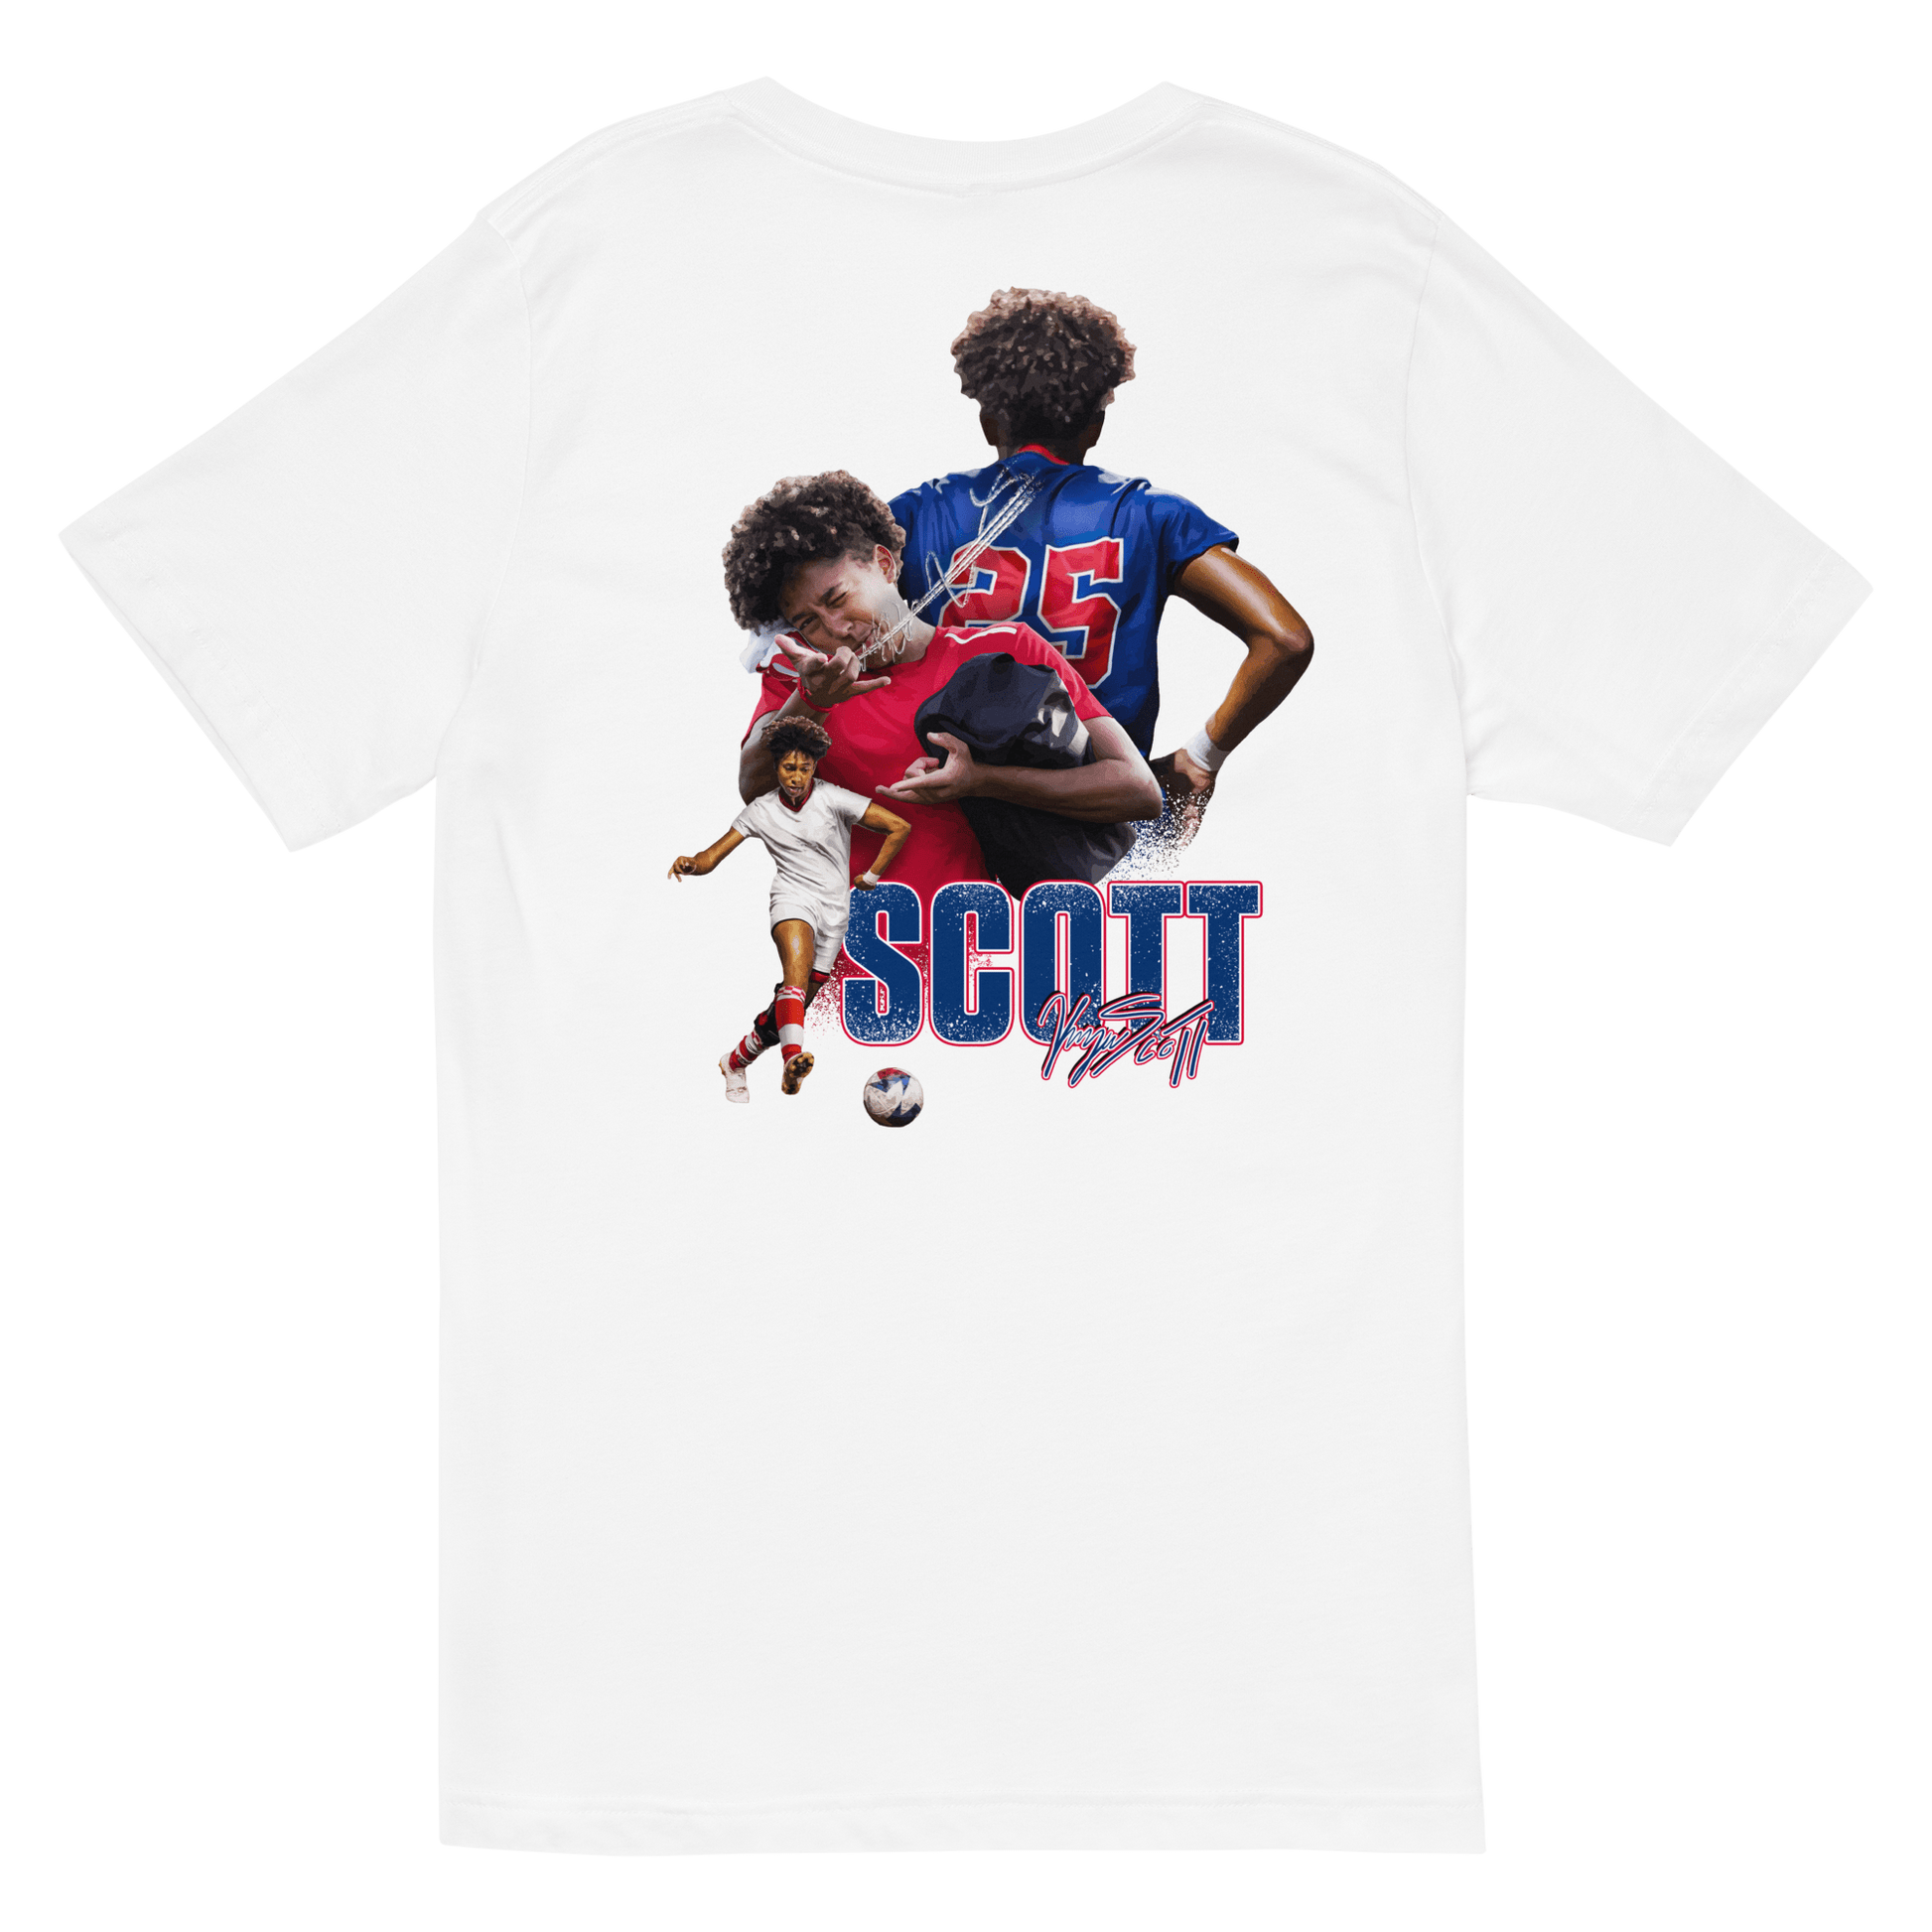 Kaya Scott | Mural & Patch V-neck T-shirt - Clutch -